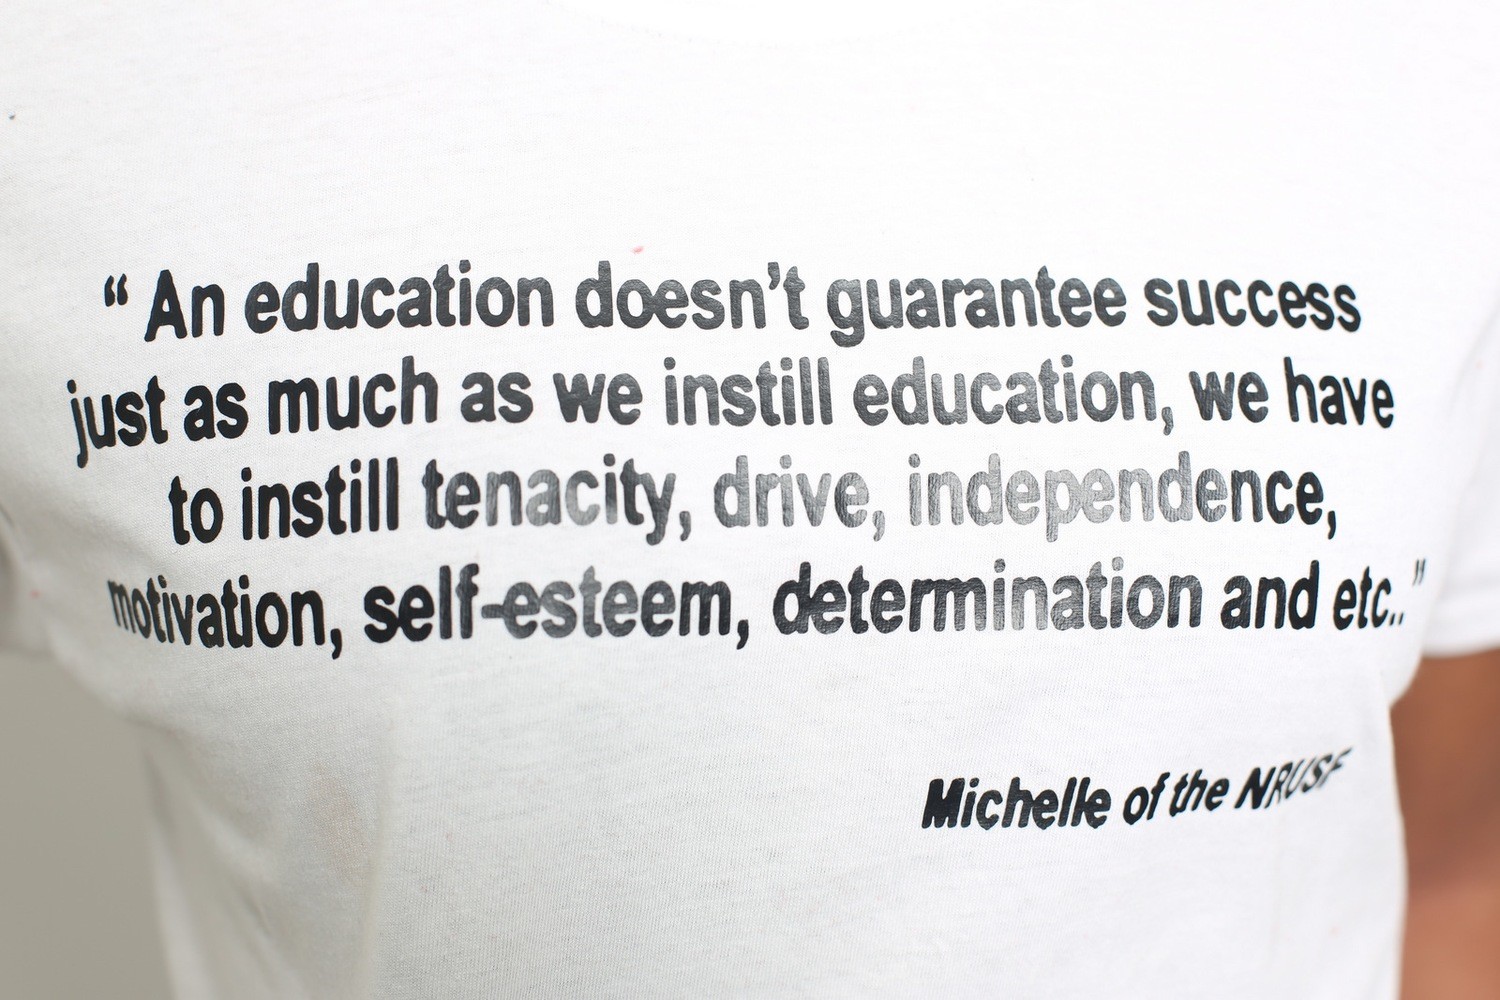 The "Michelle" T-shirt